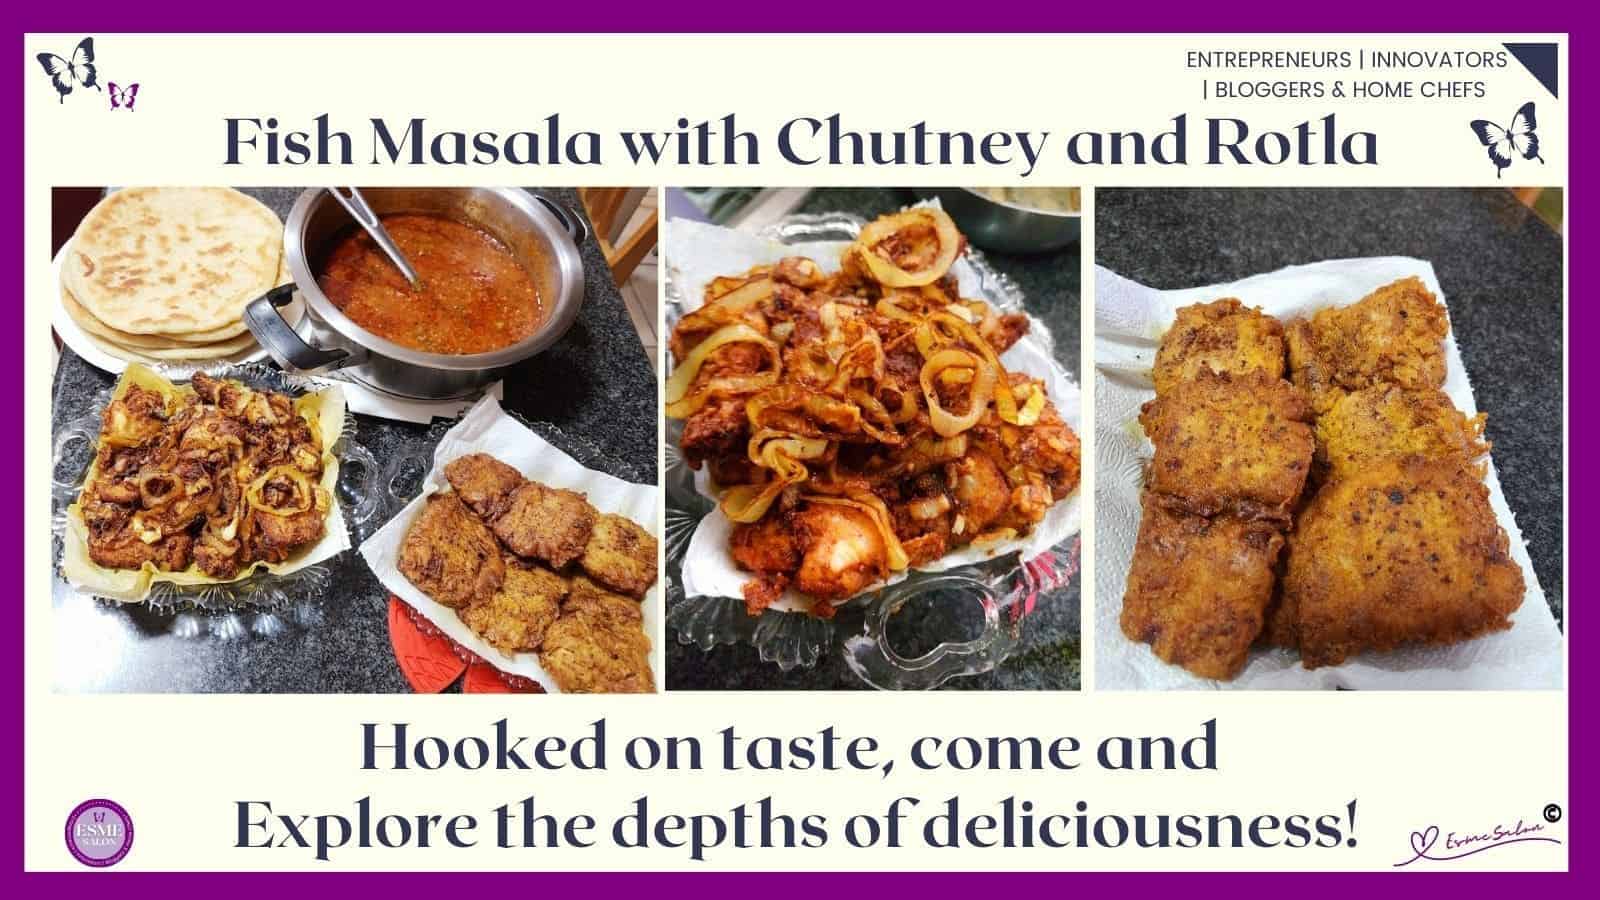 an image of Fish Masala, Chutney & Rotla Flatbread